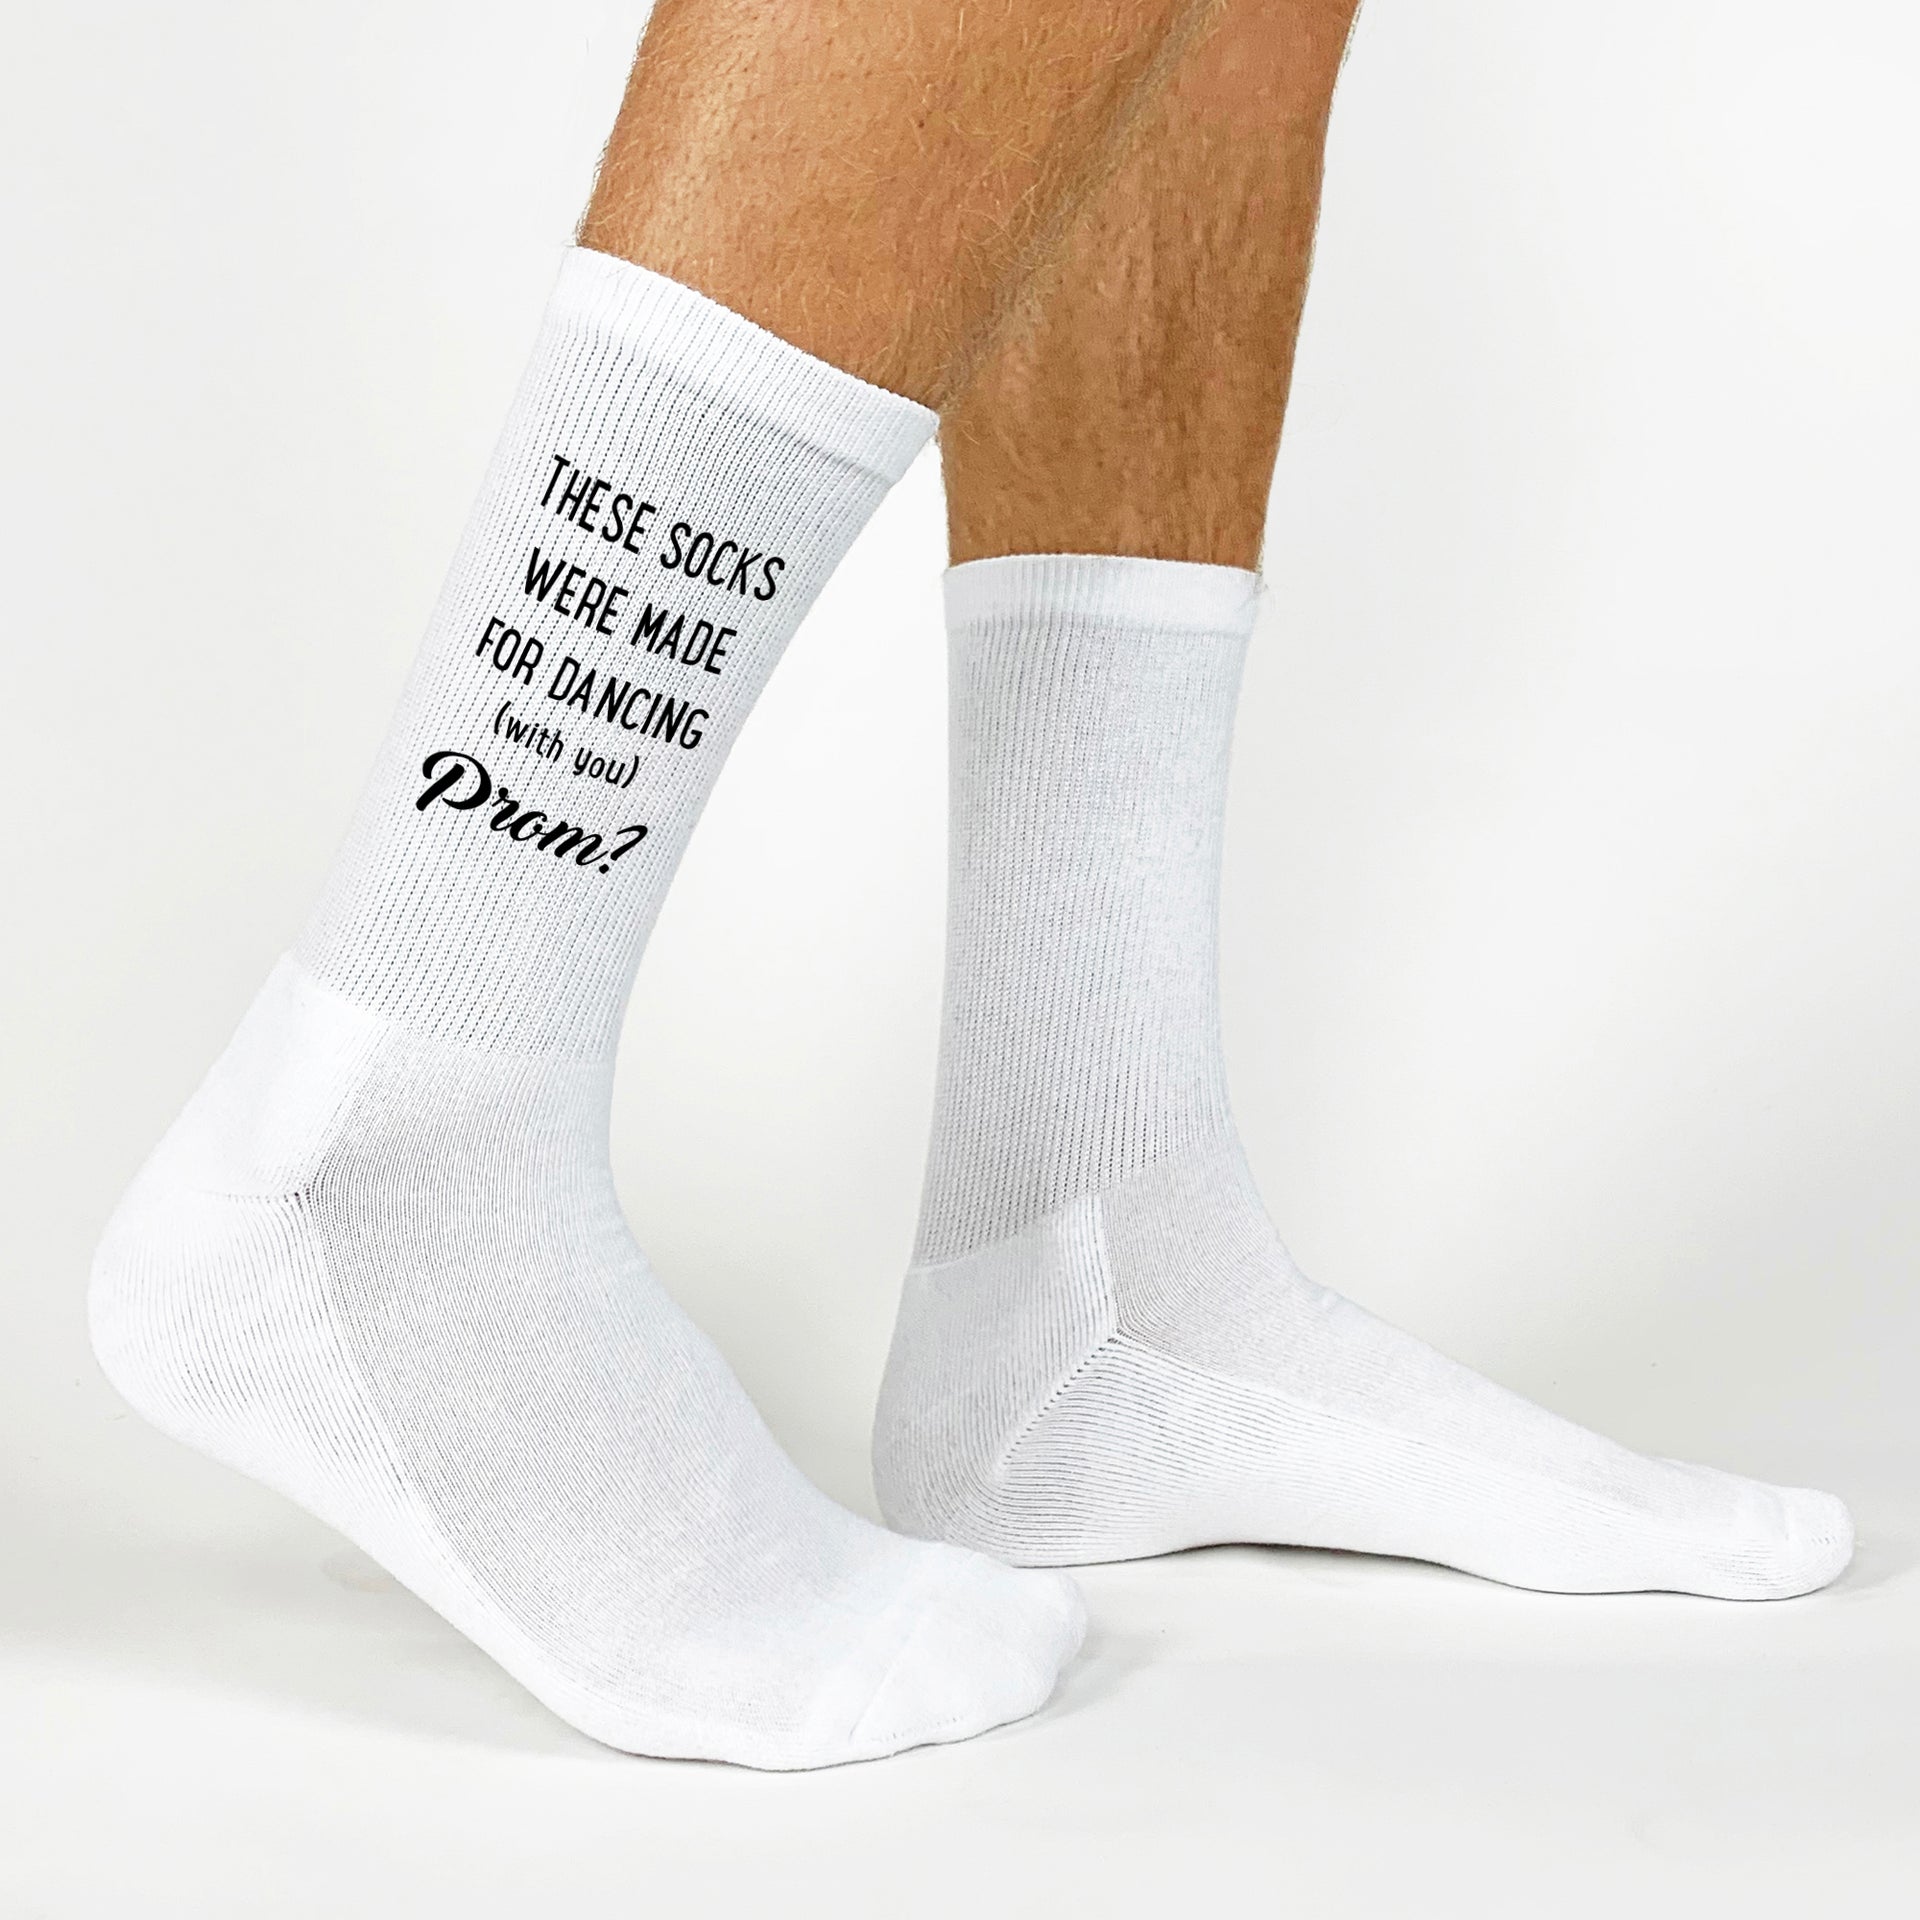 My Goal is Prom - PROMposal Socks - White Cotton Socks